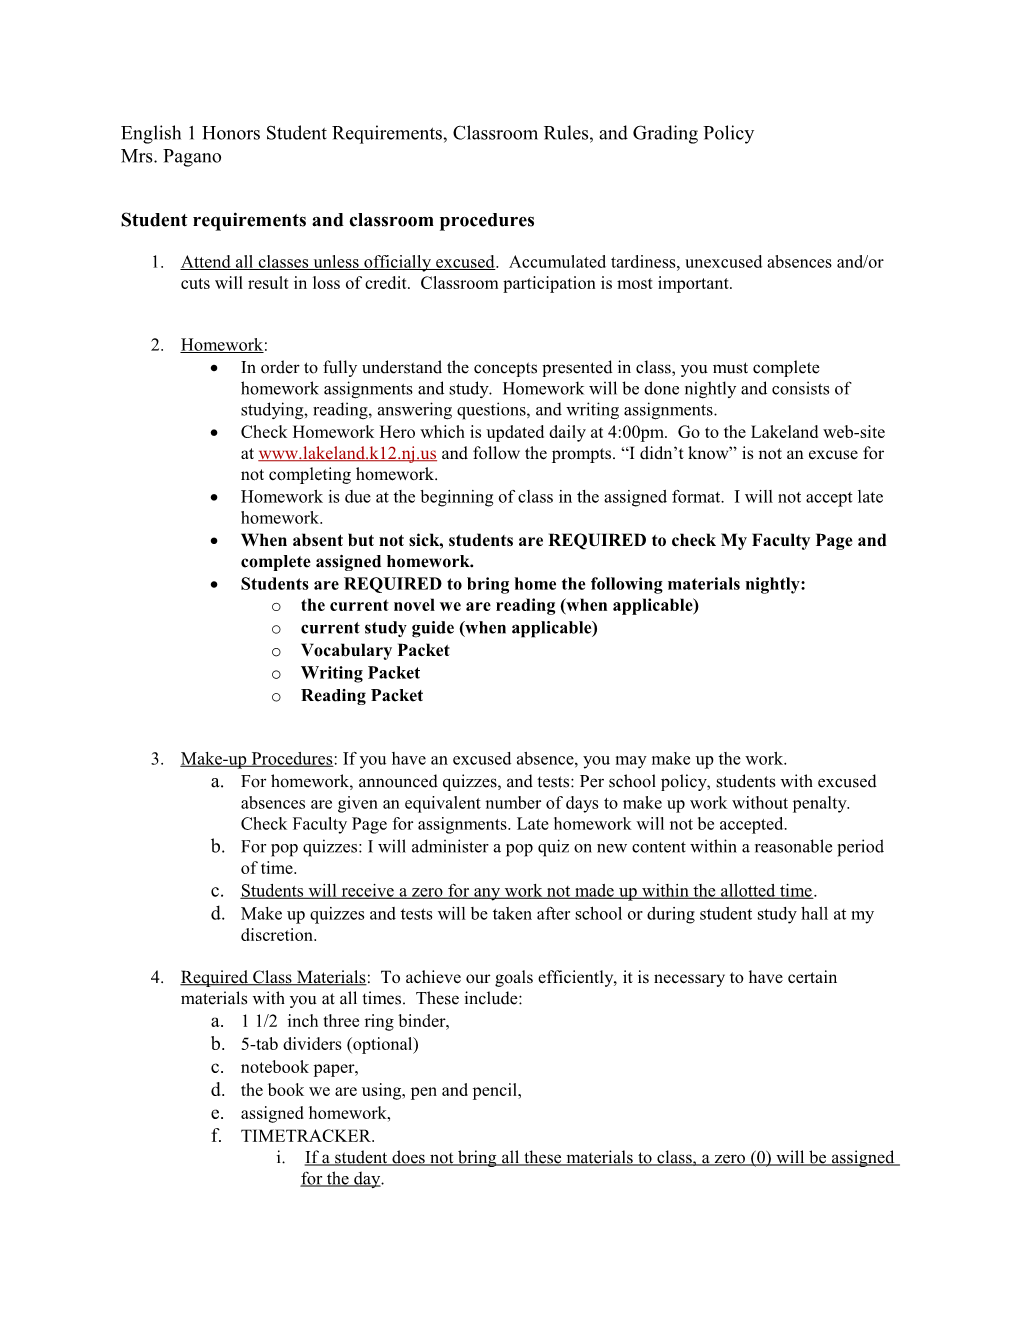 Student Requirements and Classroom Procedures